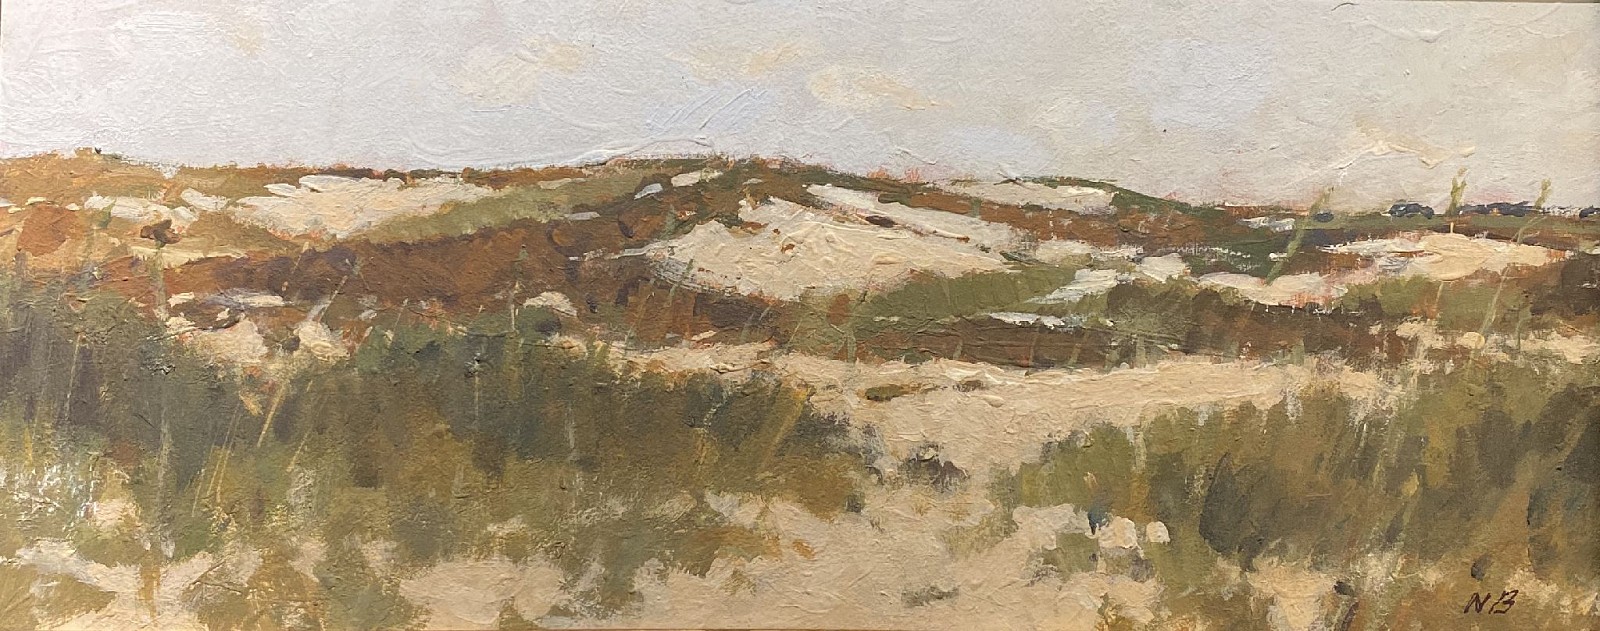 Nicholas Berger, Dune Path, 2020
oil on panel, 4 3/4 x 11 in. (12.1 x 27.9 cm)
NB200505